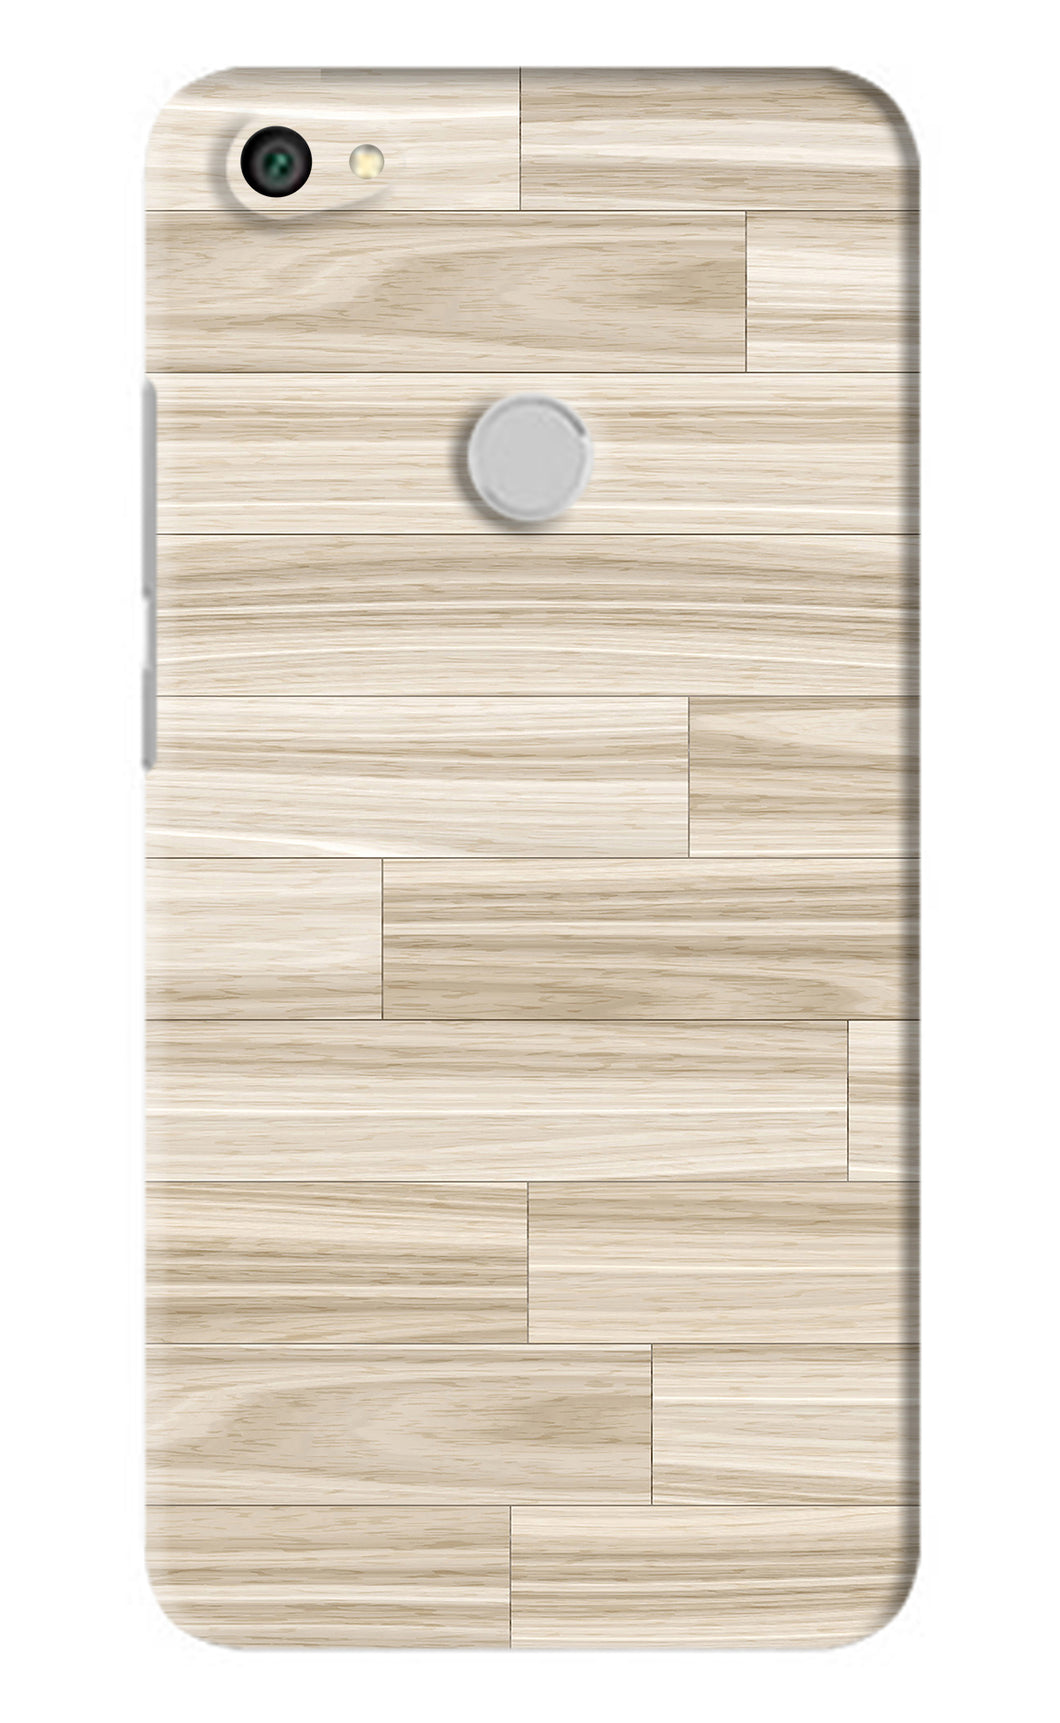 Wooden Art Texture Xiaomi Redmi Y1 Back Skin Wrap